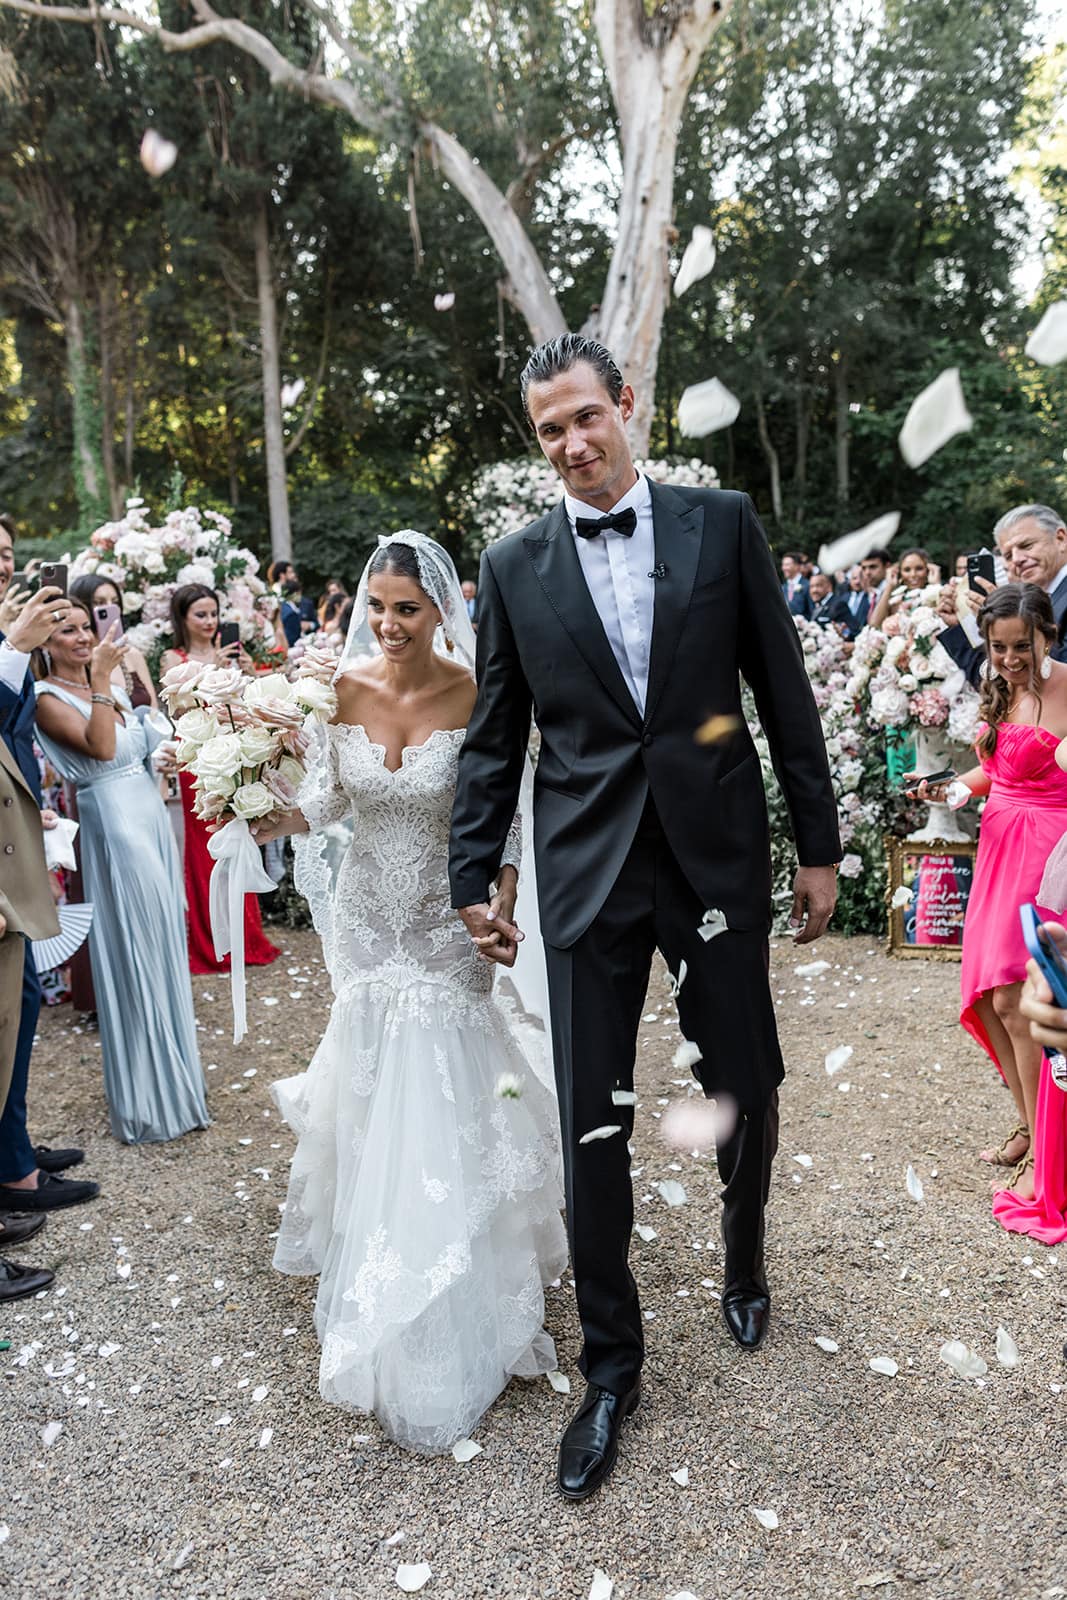 Bride and groom walk down ceremony aisle at Sardinia wedding